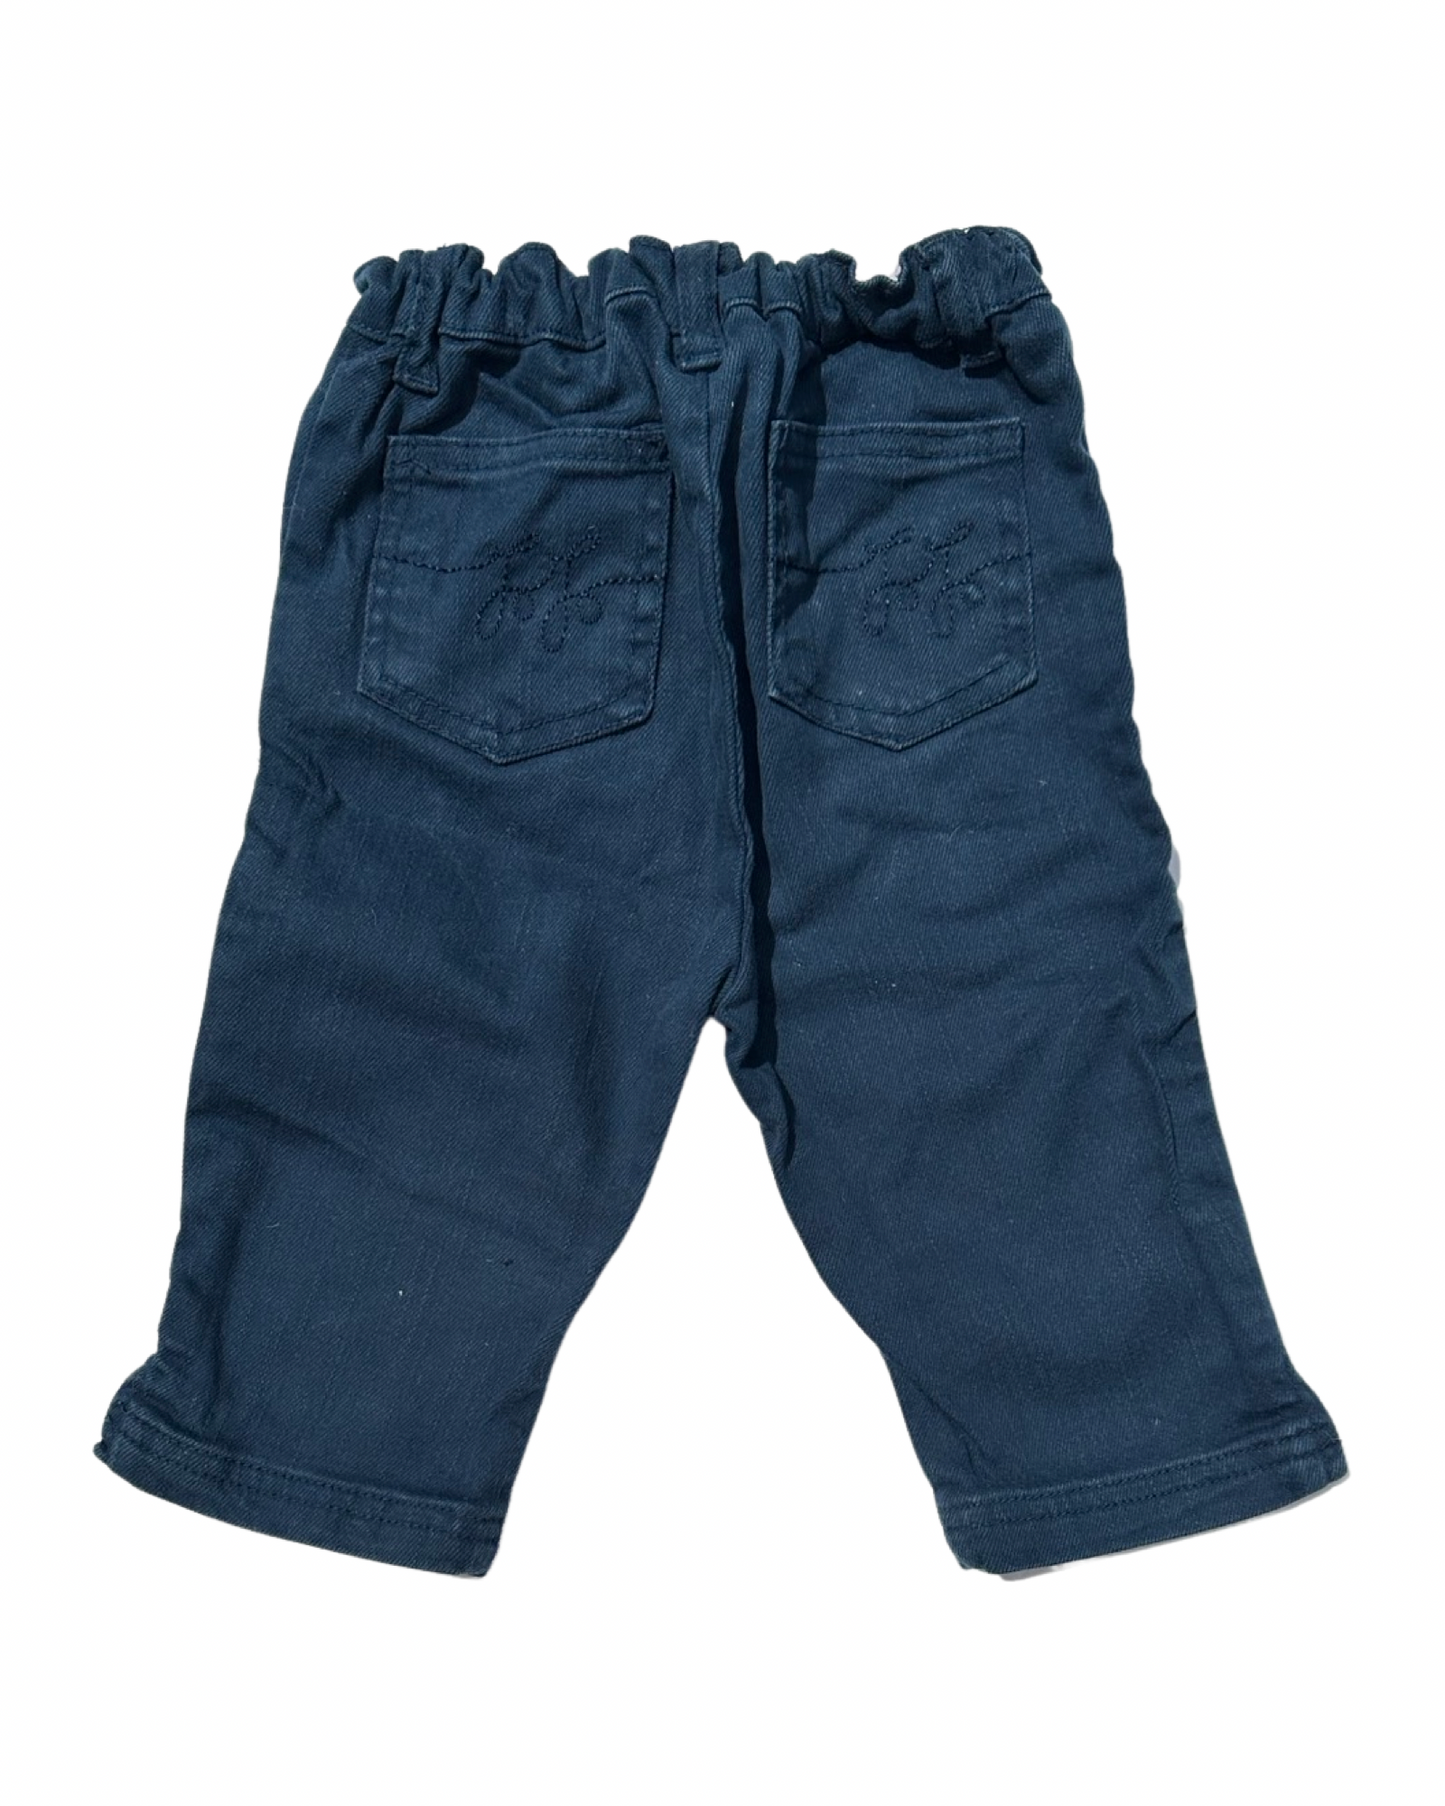 JoJo Maman Bebe navy cropped trousers (size 2-3yrs)